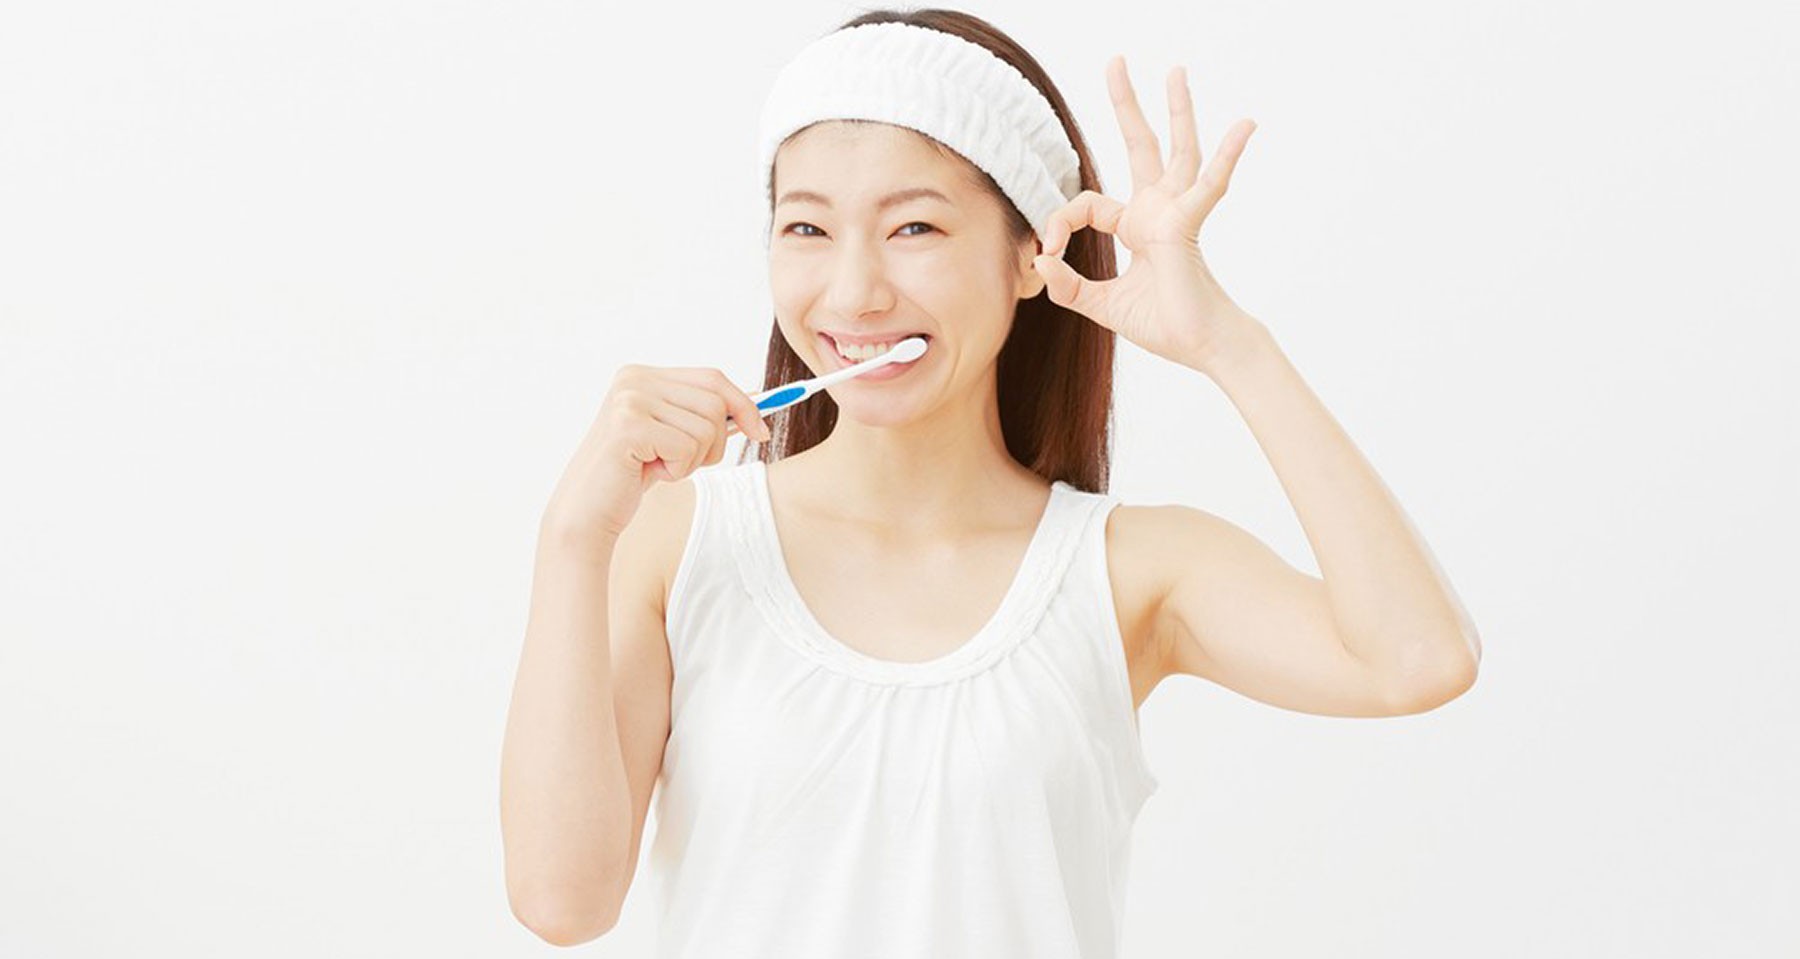 0abf9b6e52d2aec3c1a2abf1b4c0addc_kim-okamura-woman-brushing-her-teeth-1000-c-90